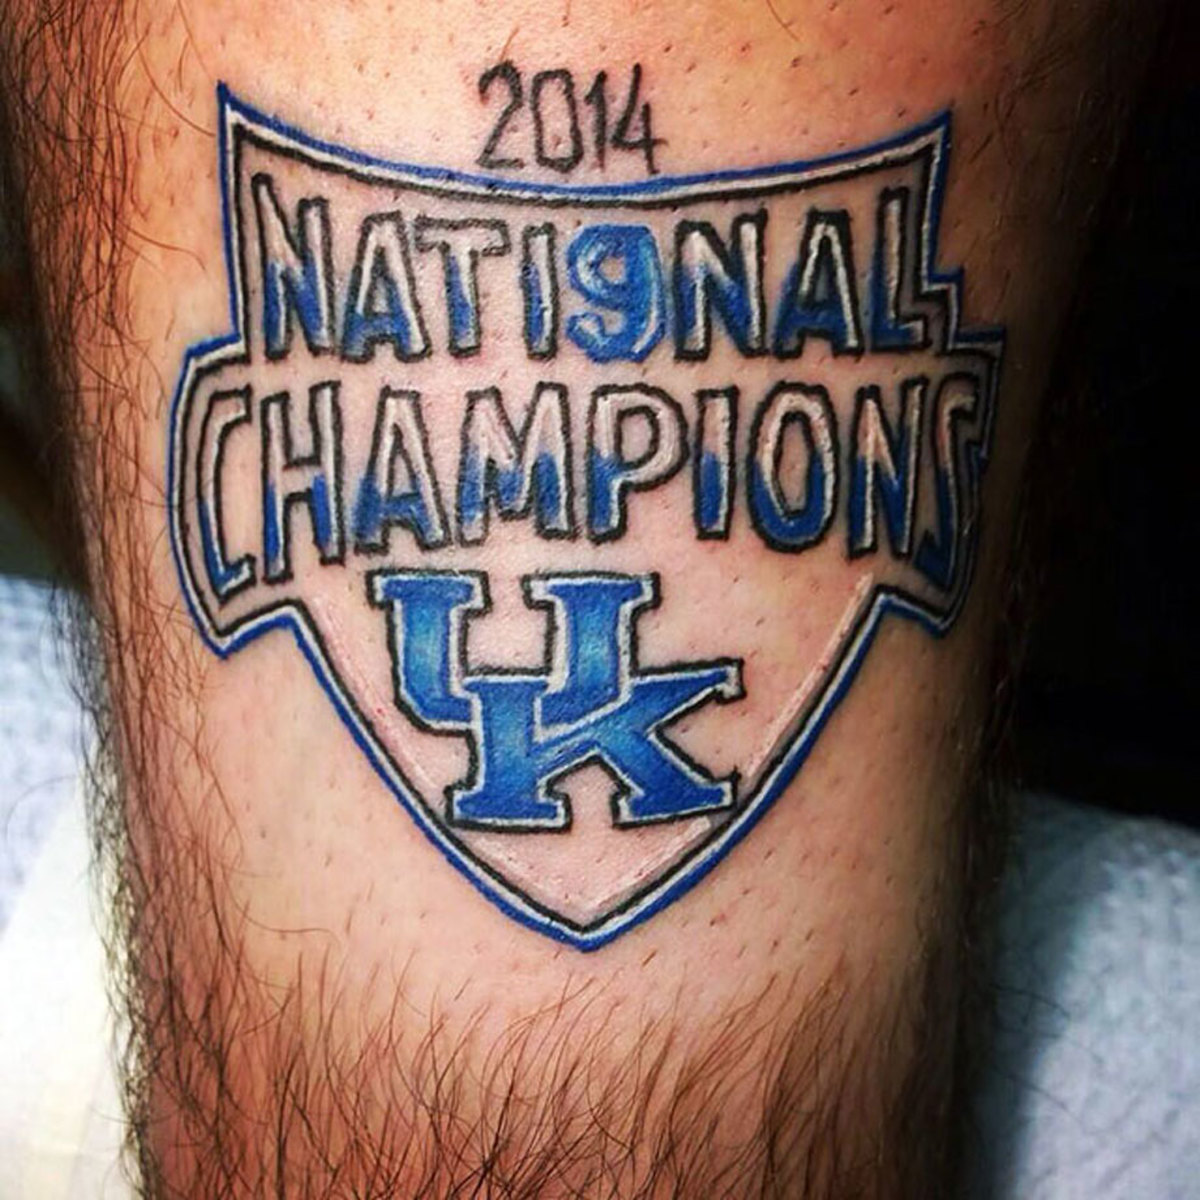 2014-0324-Kentucky-2014-National-Champions-tattoo.jpg